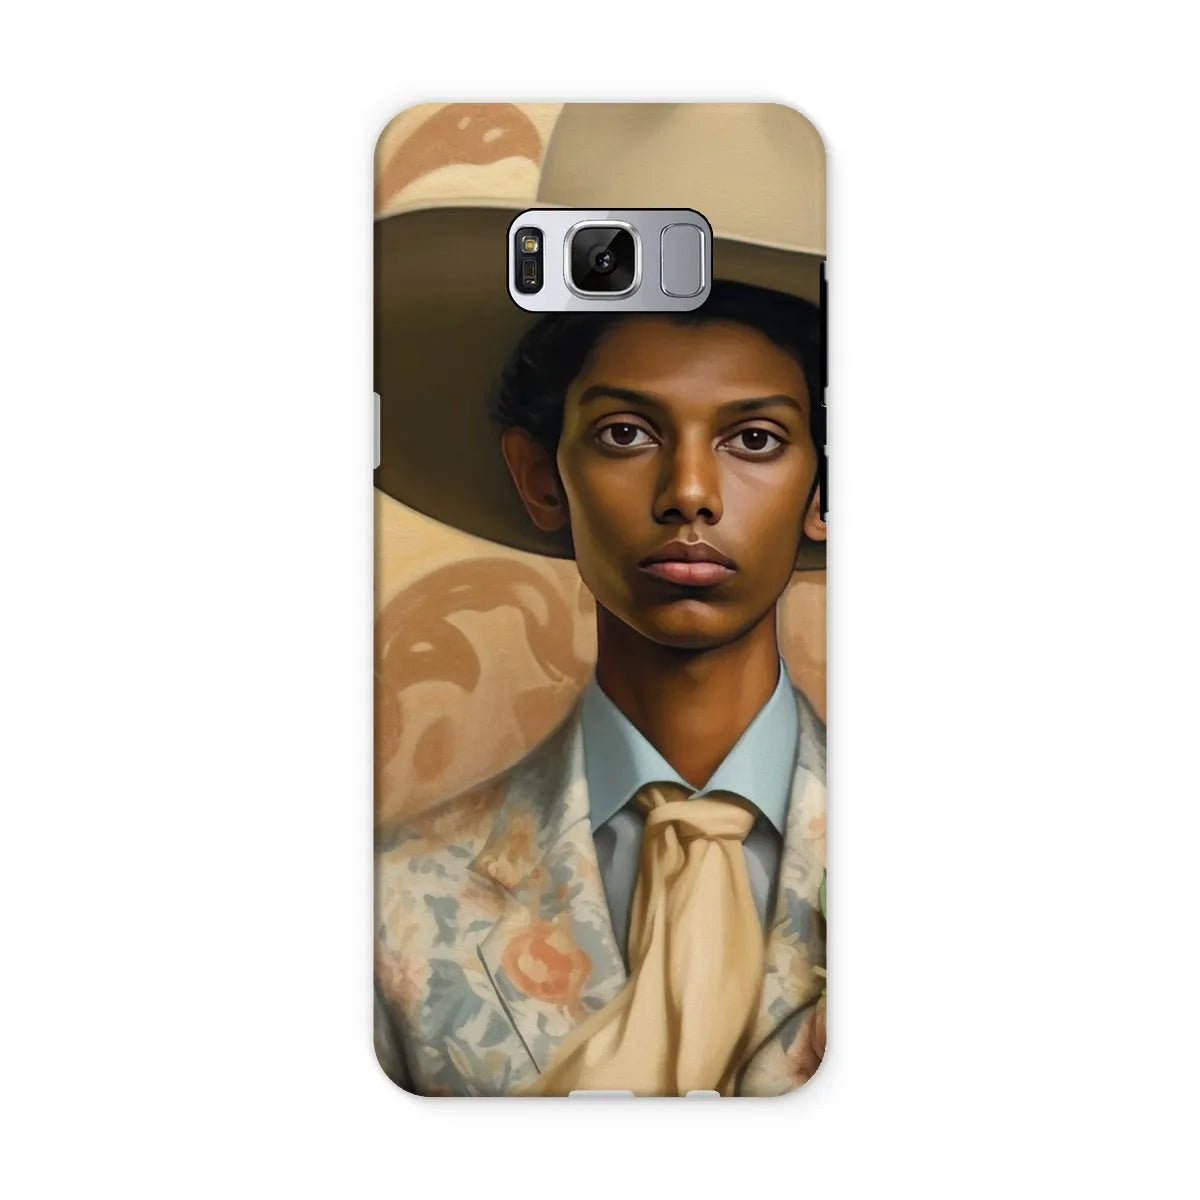 Mallaravan The Transgender Cowboy - F2m Dandy Art Phone Case - Samsung Galaxy S8 / Matte - Mobile Phone Cases